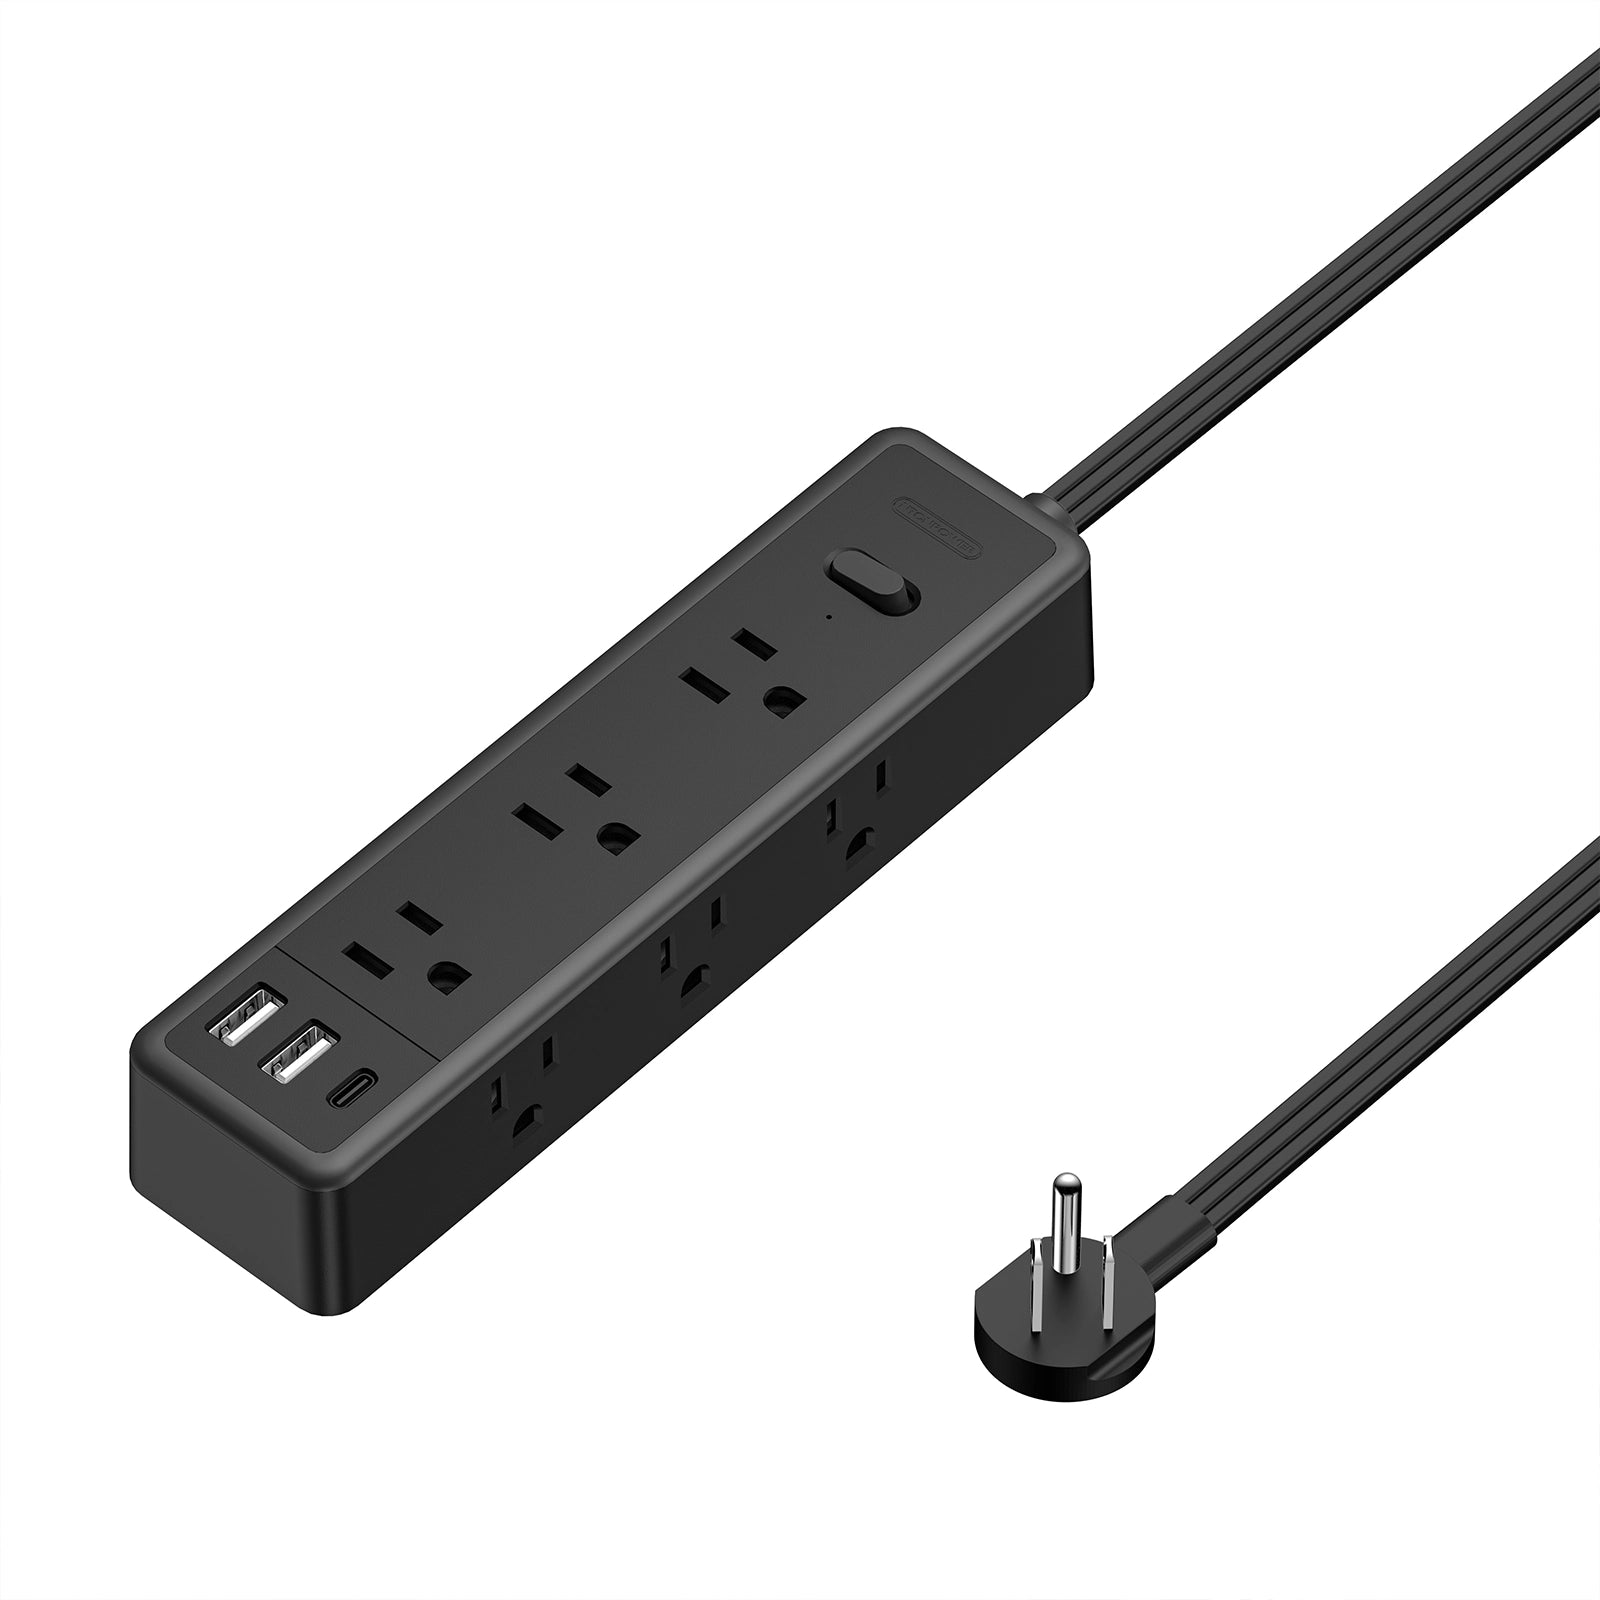 Ntonpower New Power Strip 9 Outlets 2 USB-A 1 USB-C Travel Home Dorm